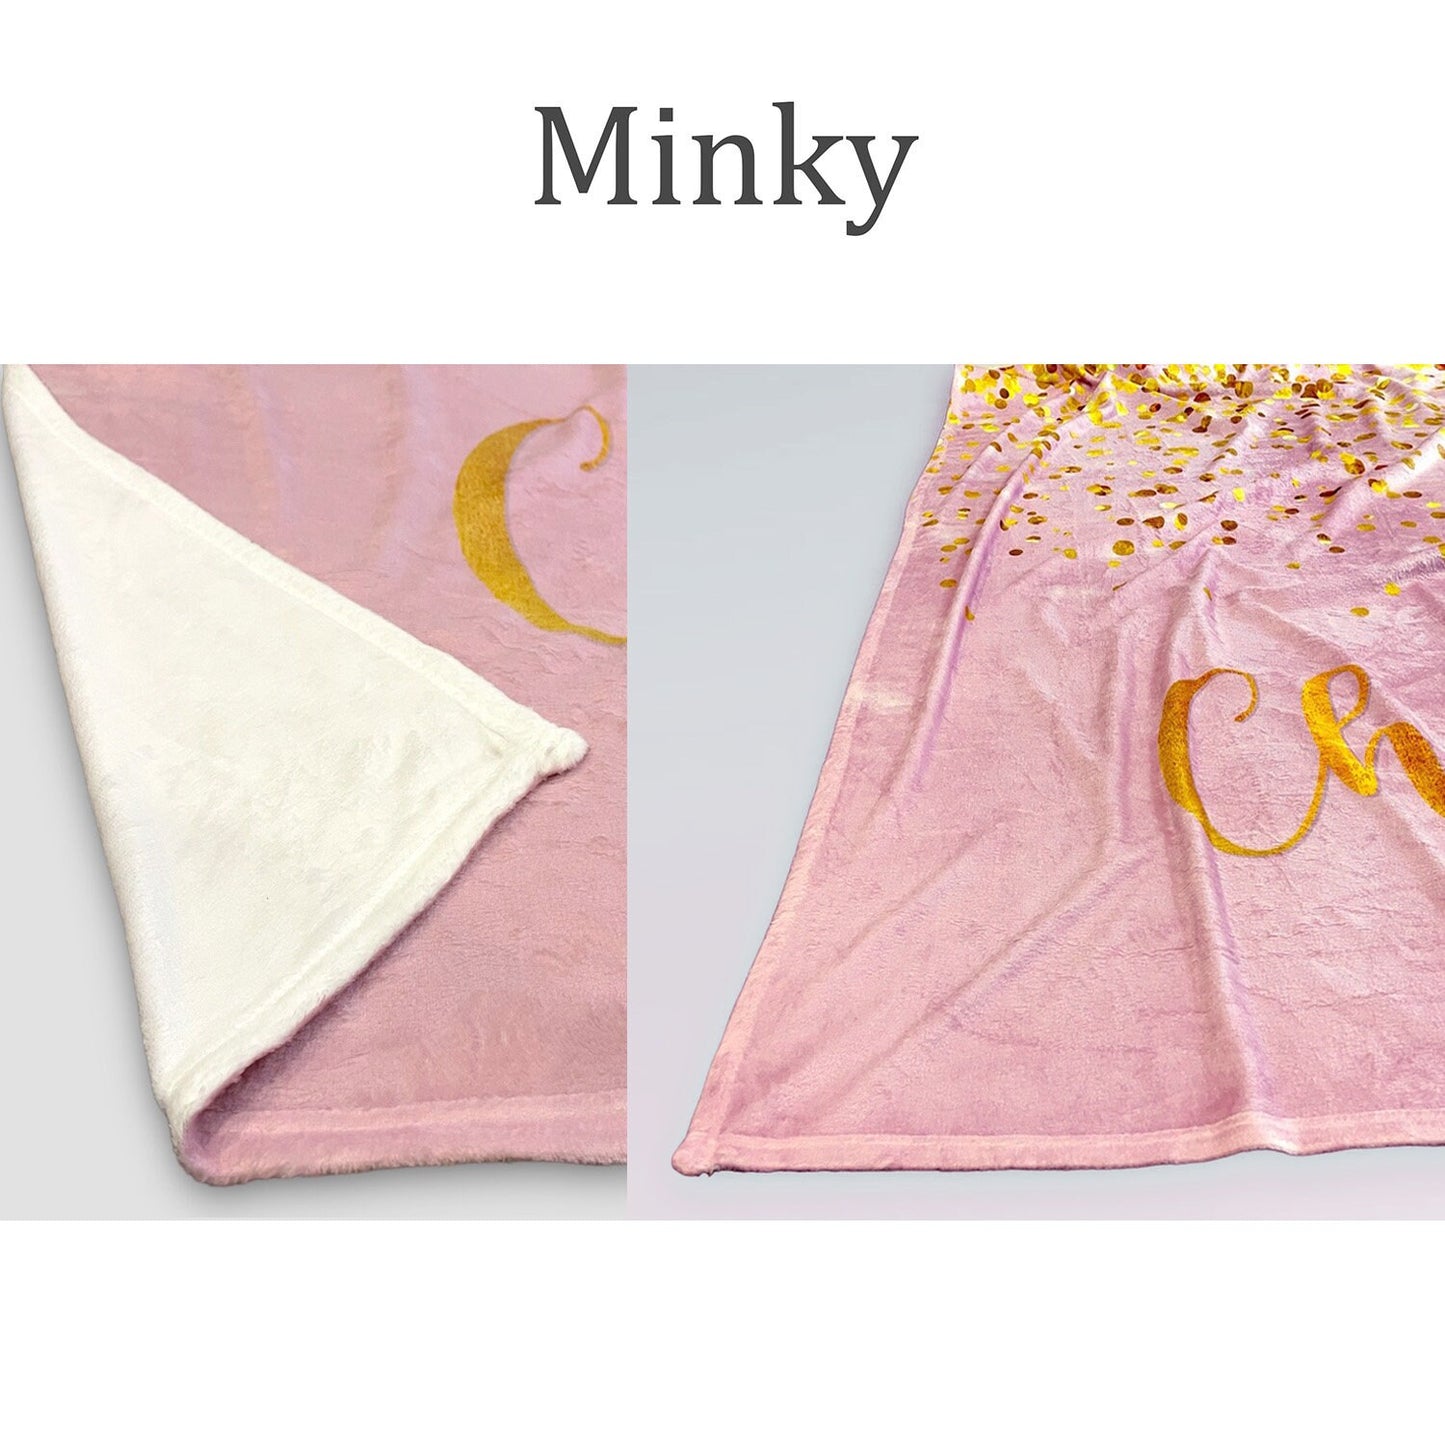 Smile Sunshine Personalized blanket with Name, Custom blanket gift, Birthday Kids Gift